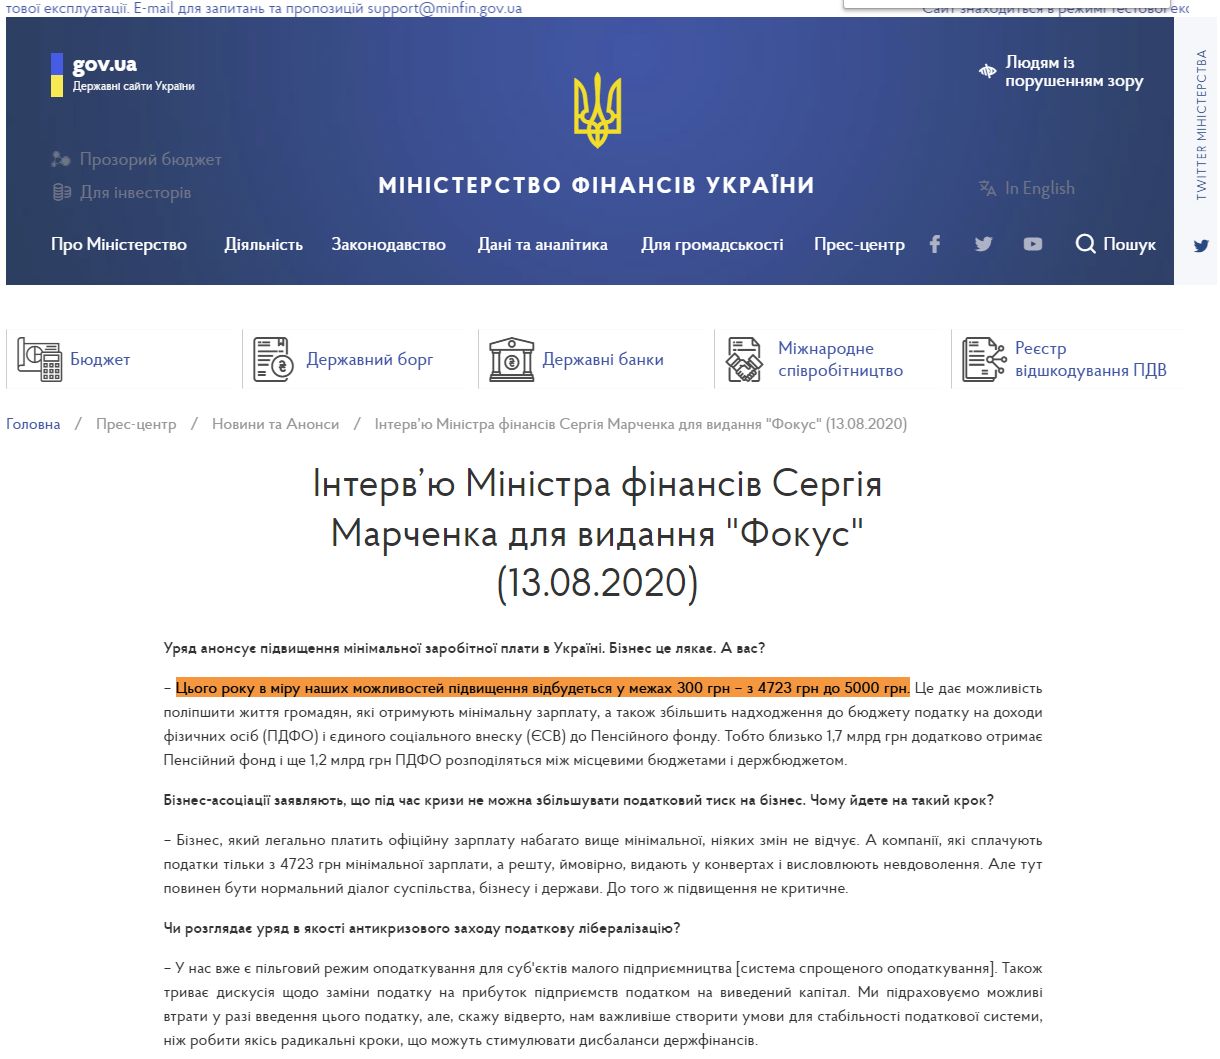 https://mof.gov.ua/uk/news/interviu_ministra_finansiv_sergiia_marchenka_dlia_vidannia_fokus-2356